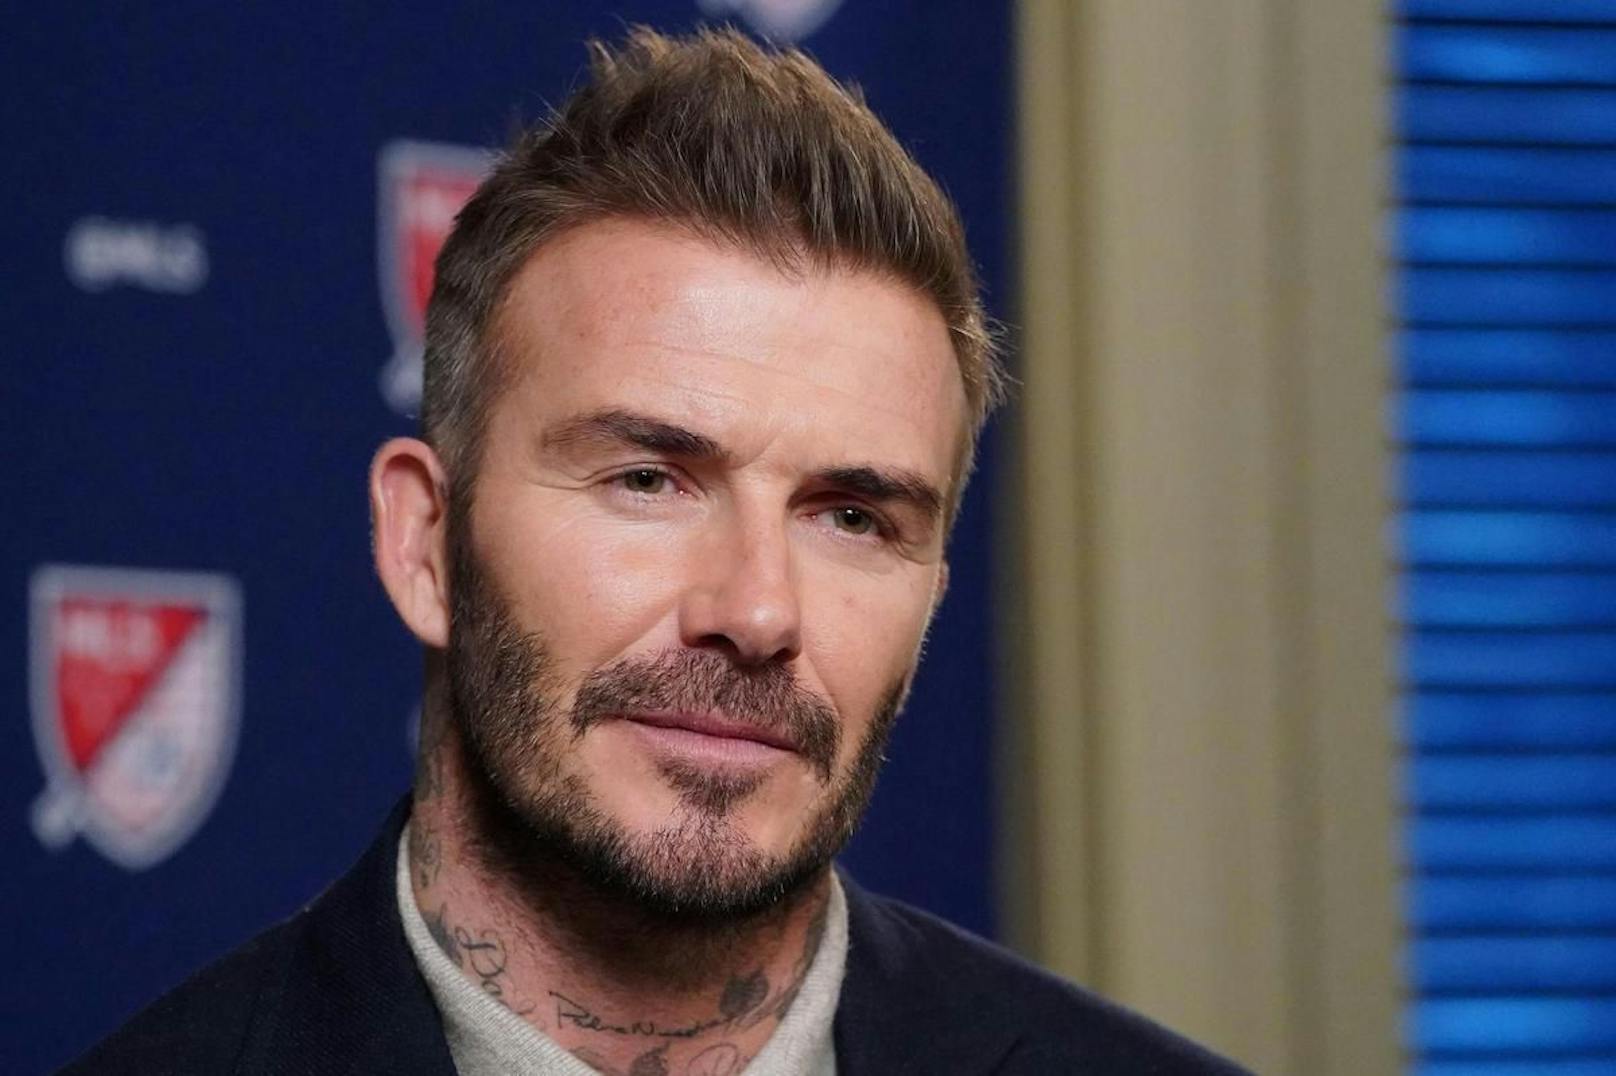 Zu den Betroffenen zählen laut Medienberichten neben Trump auch Ex-Fussballer David Beckham …